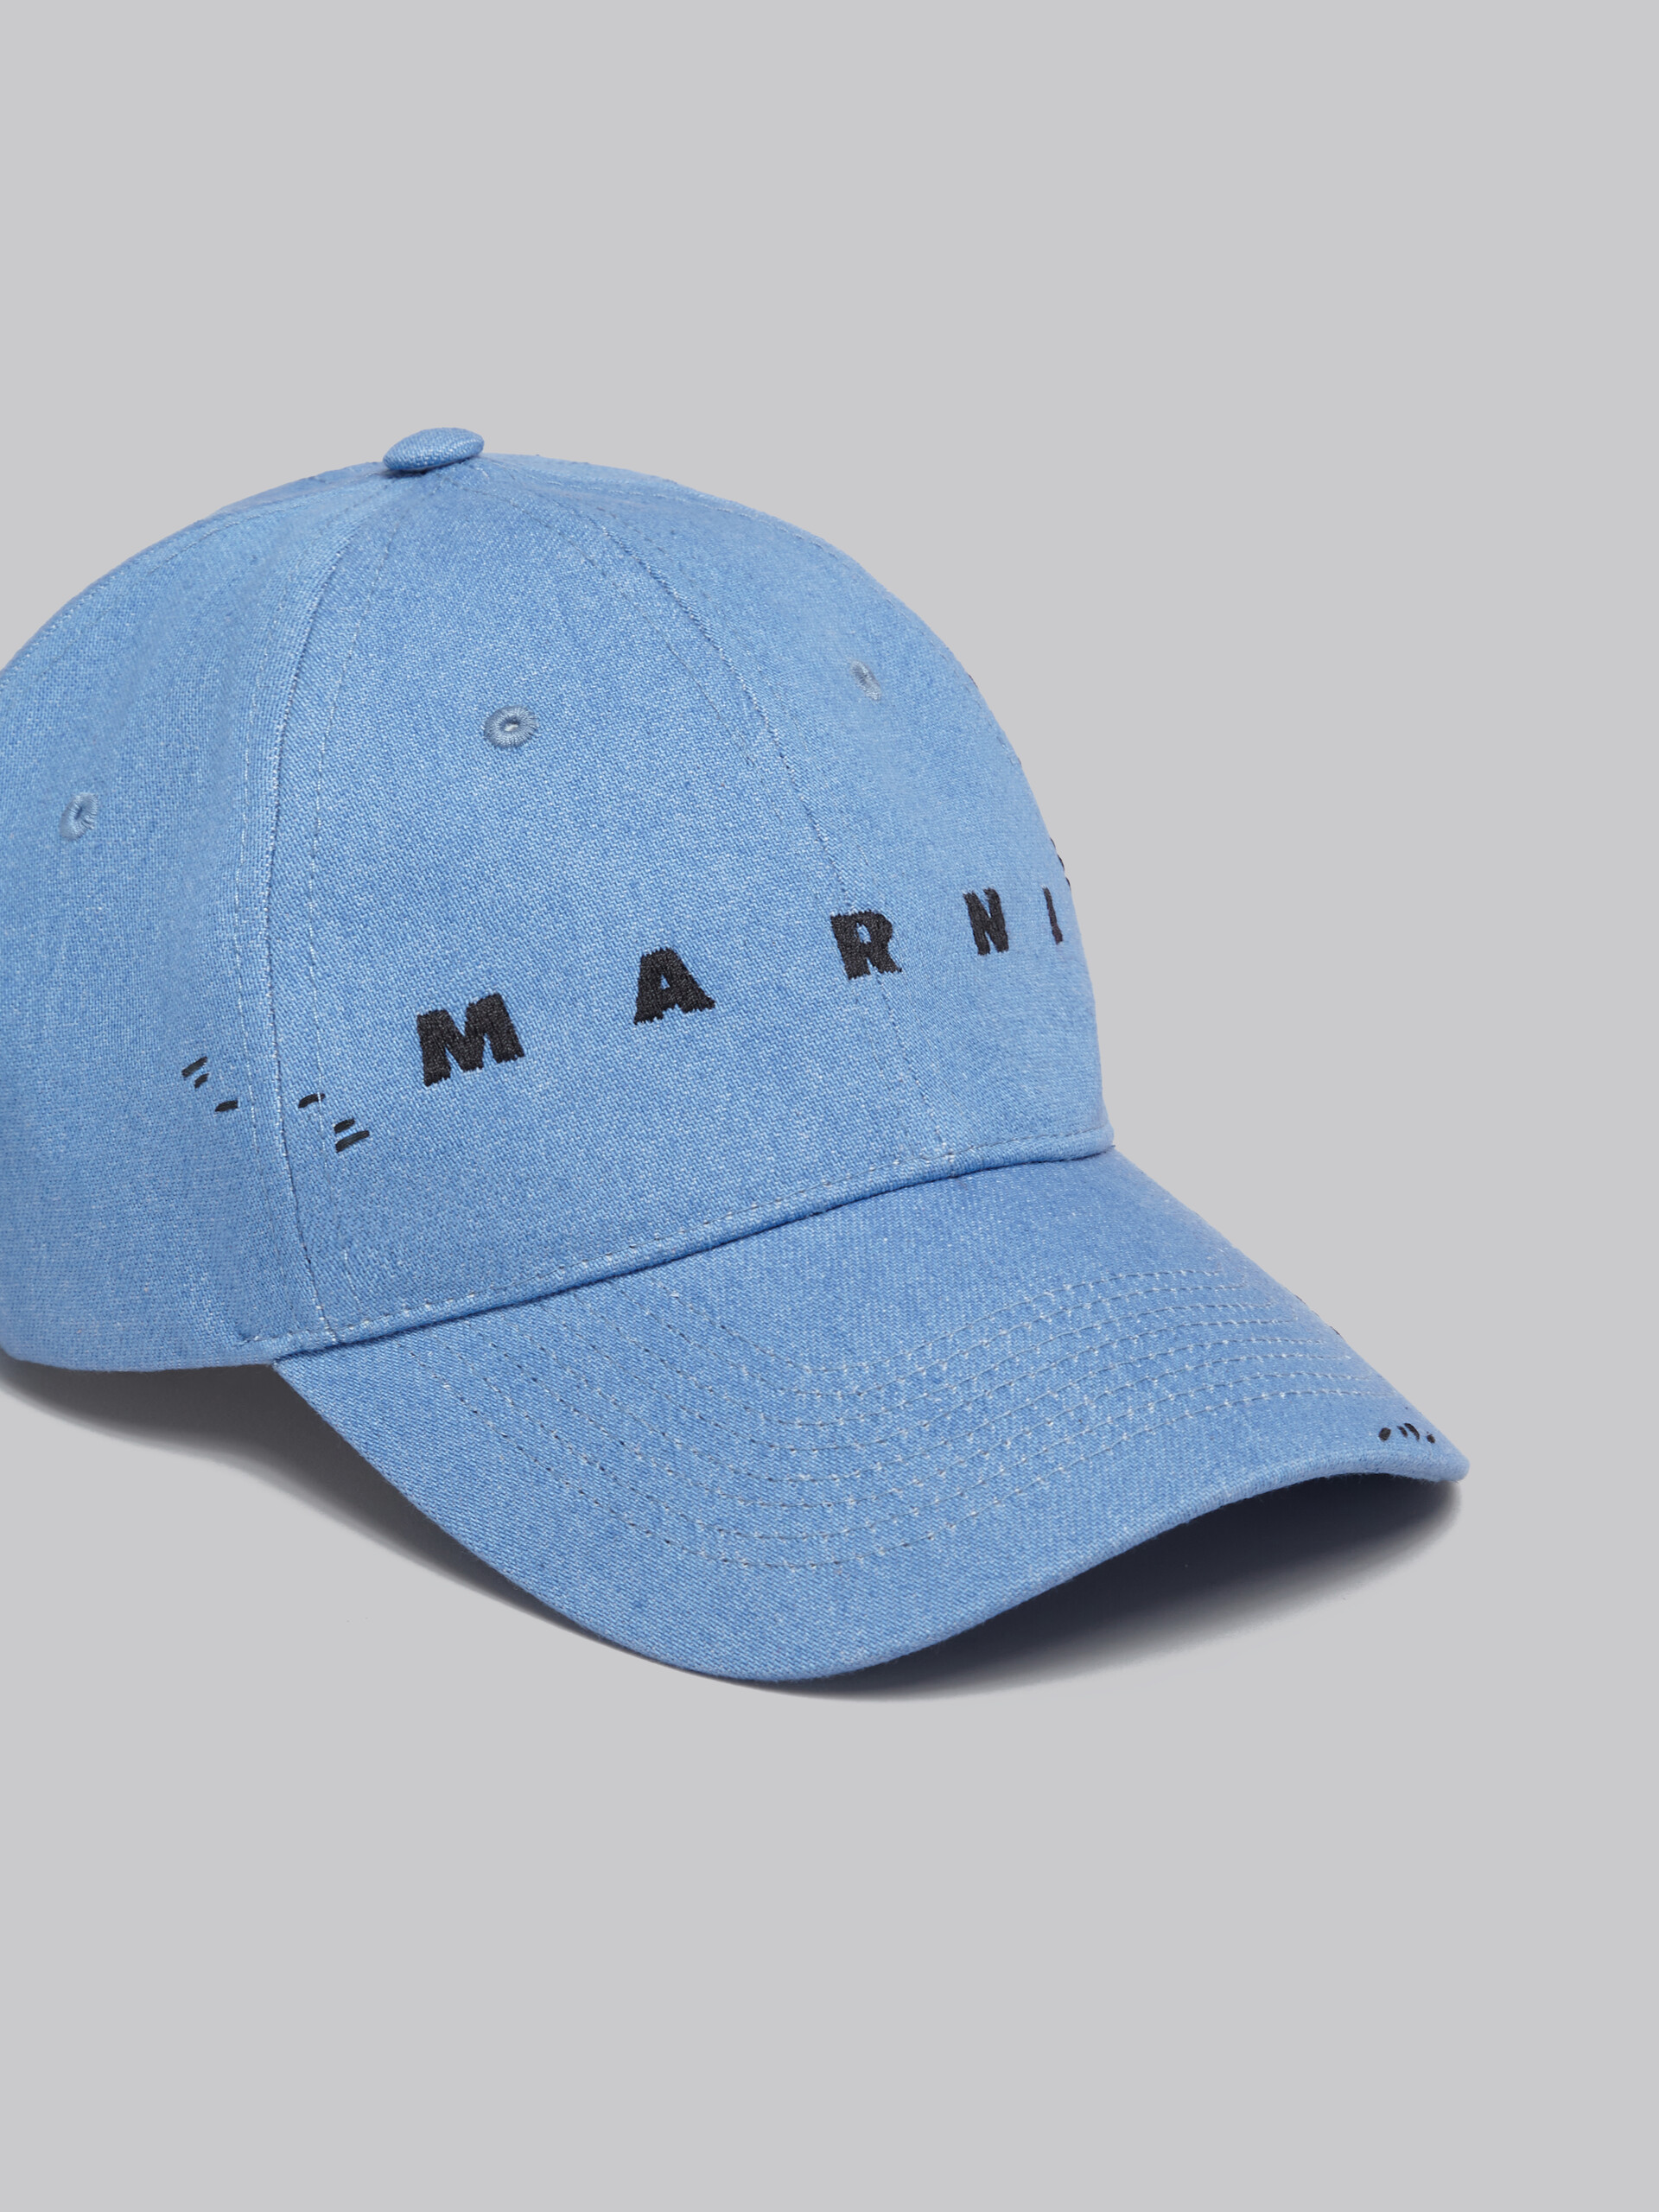 Blue denim cap with Marni mending - Hats - Image 4